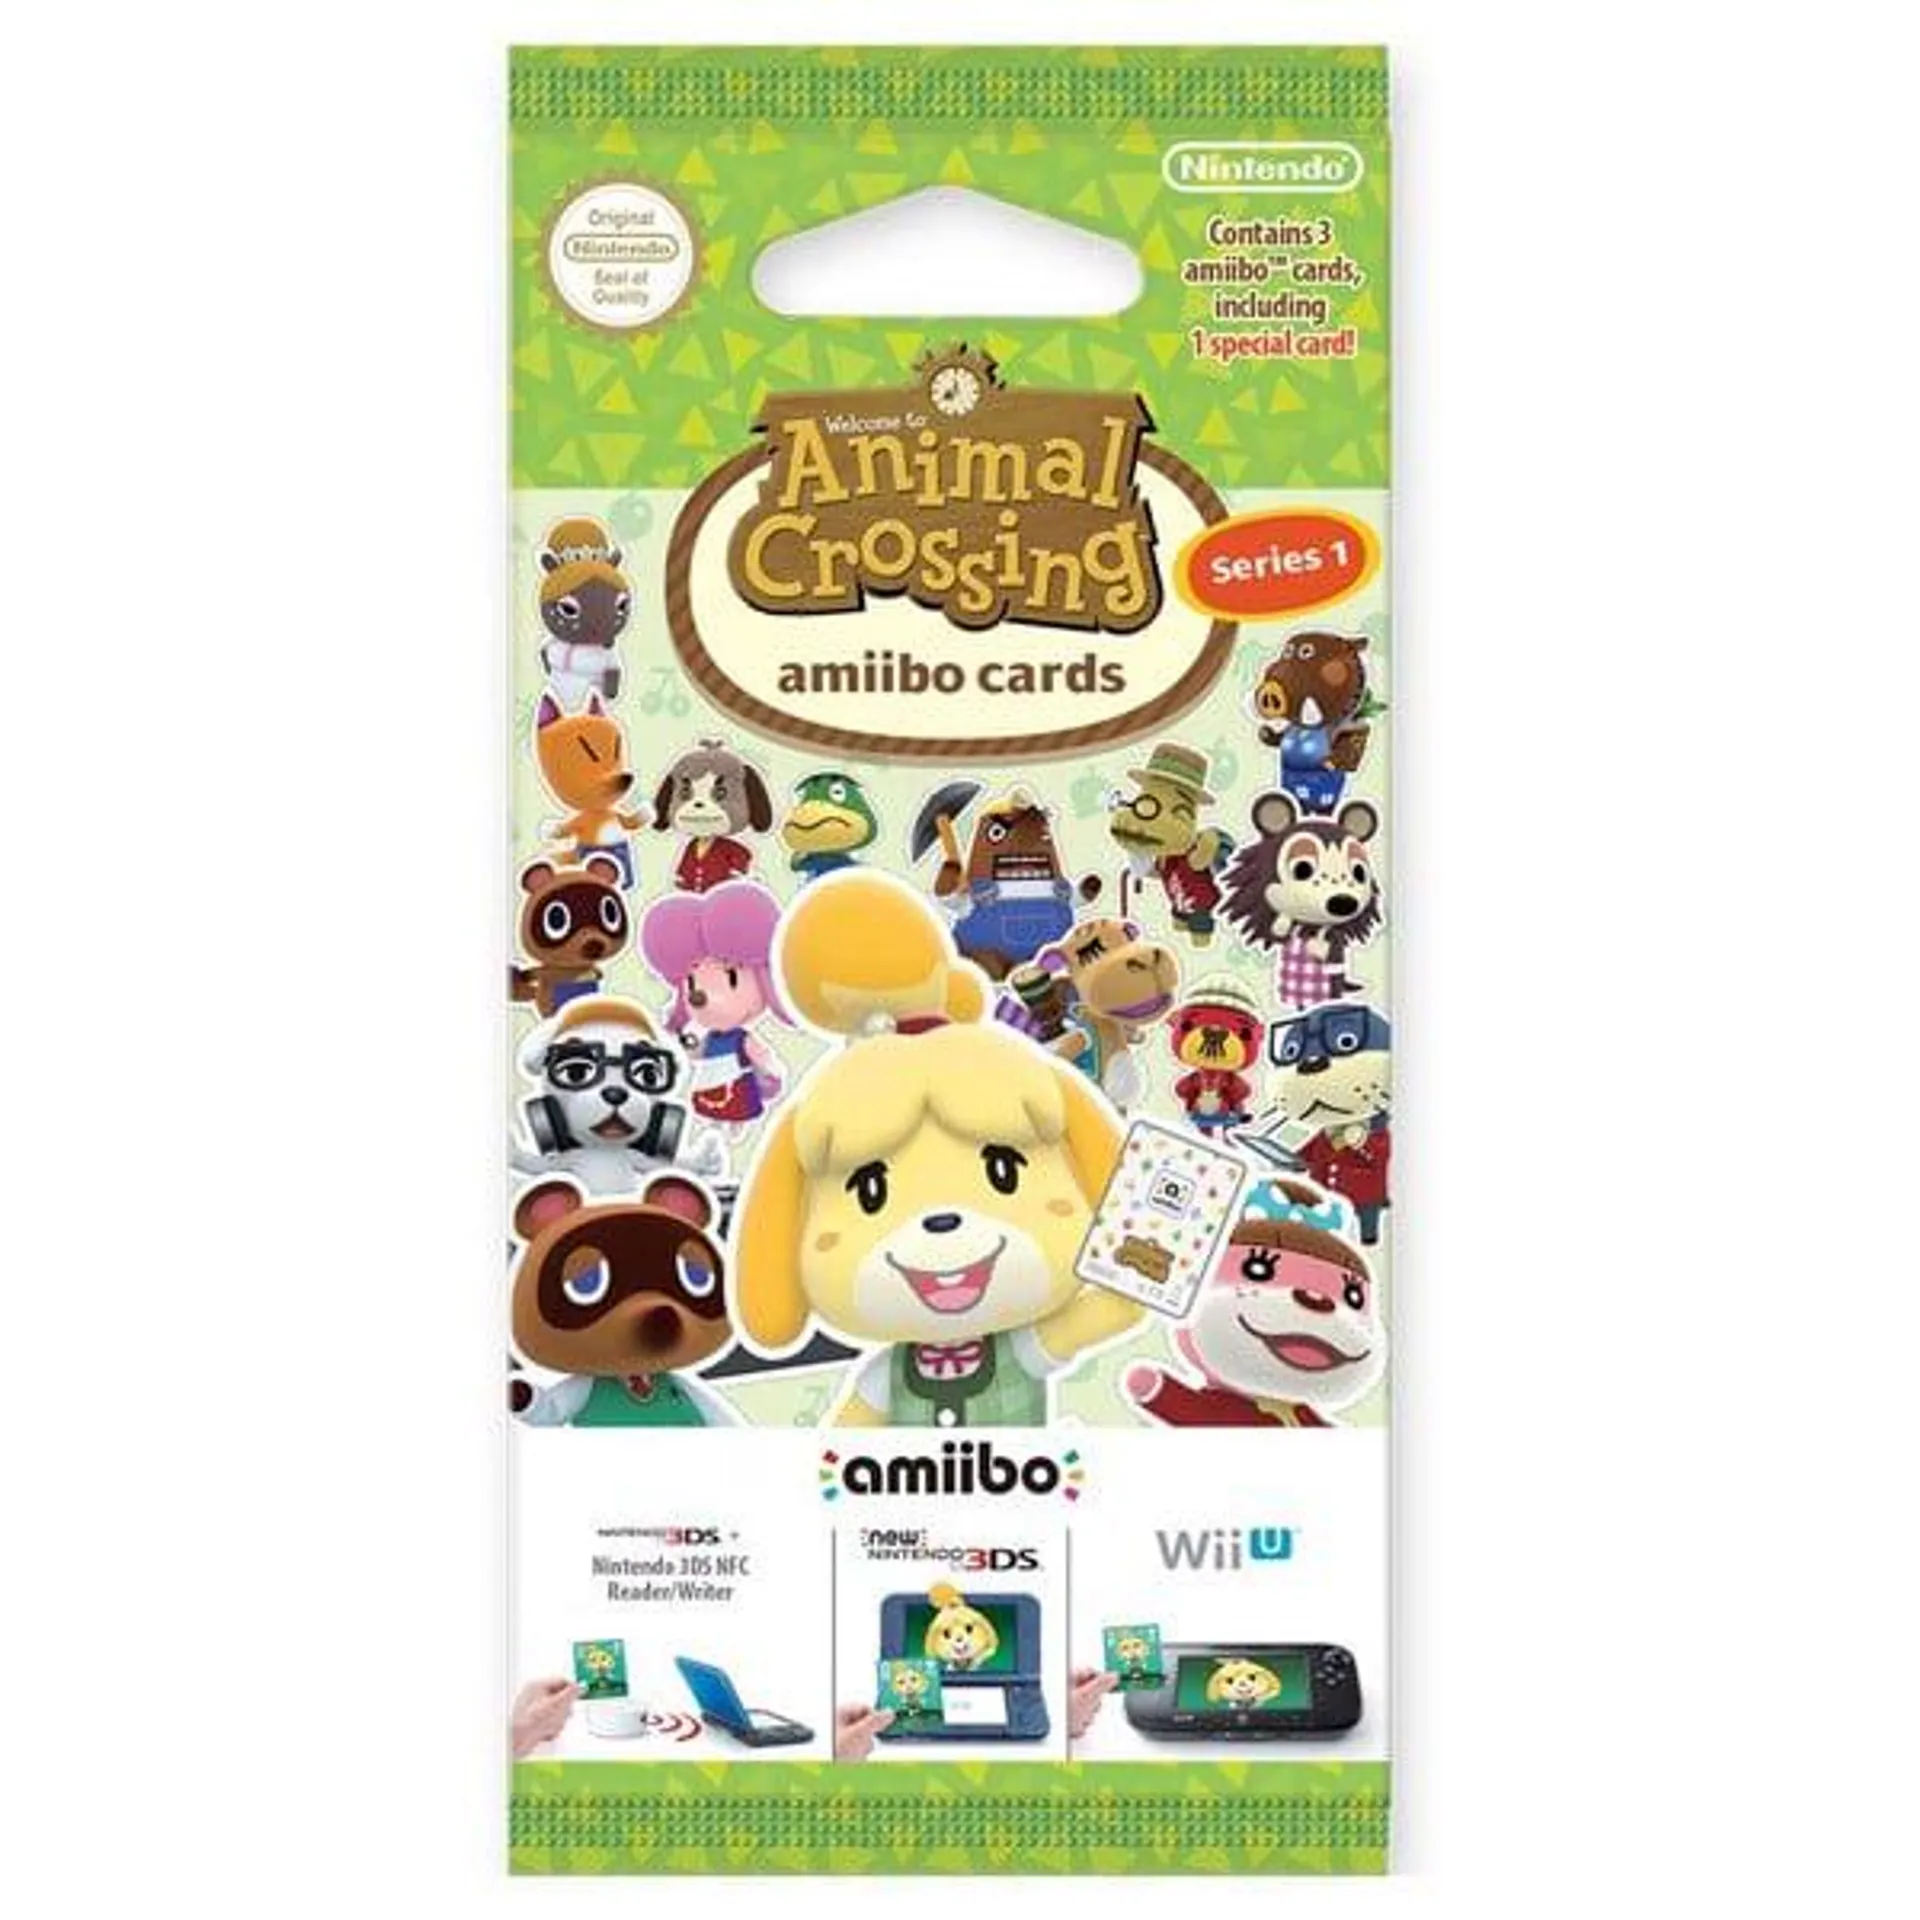 Animal Crossing - amiibo Cards Series 1